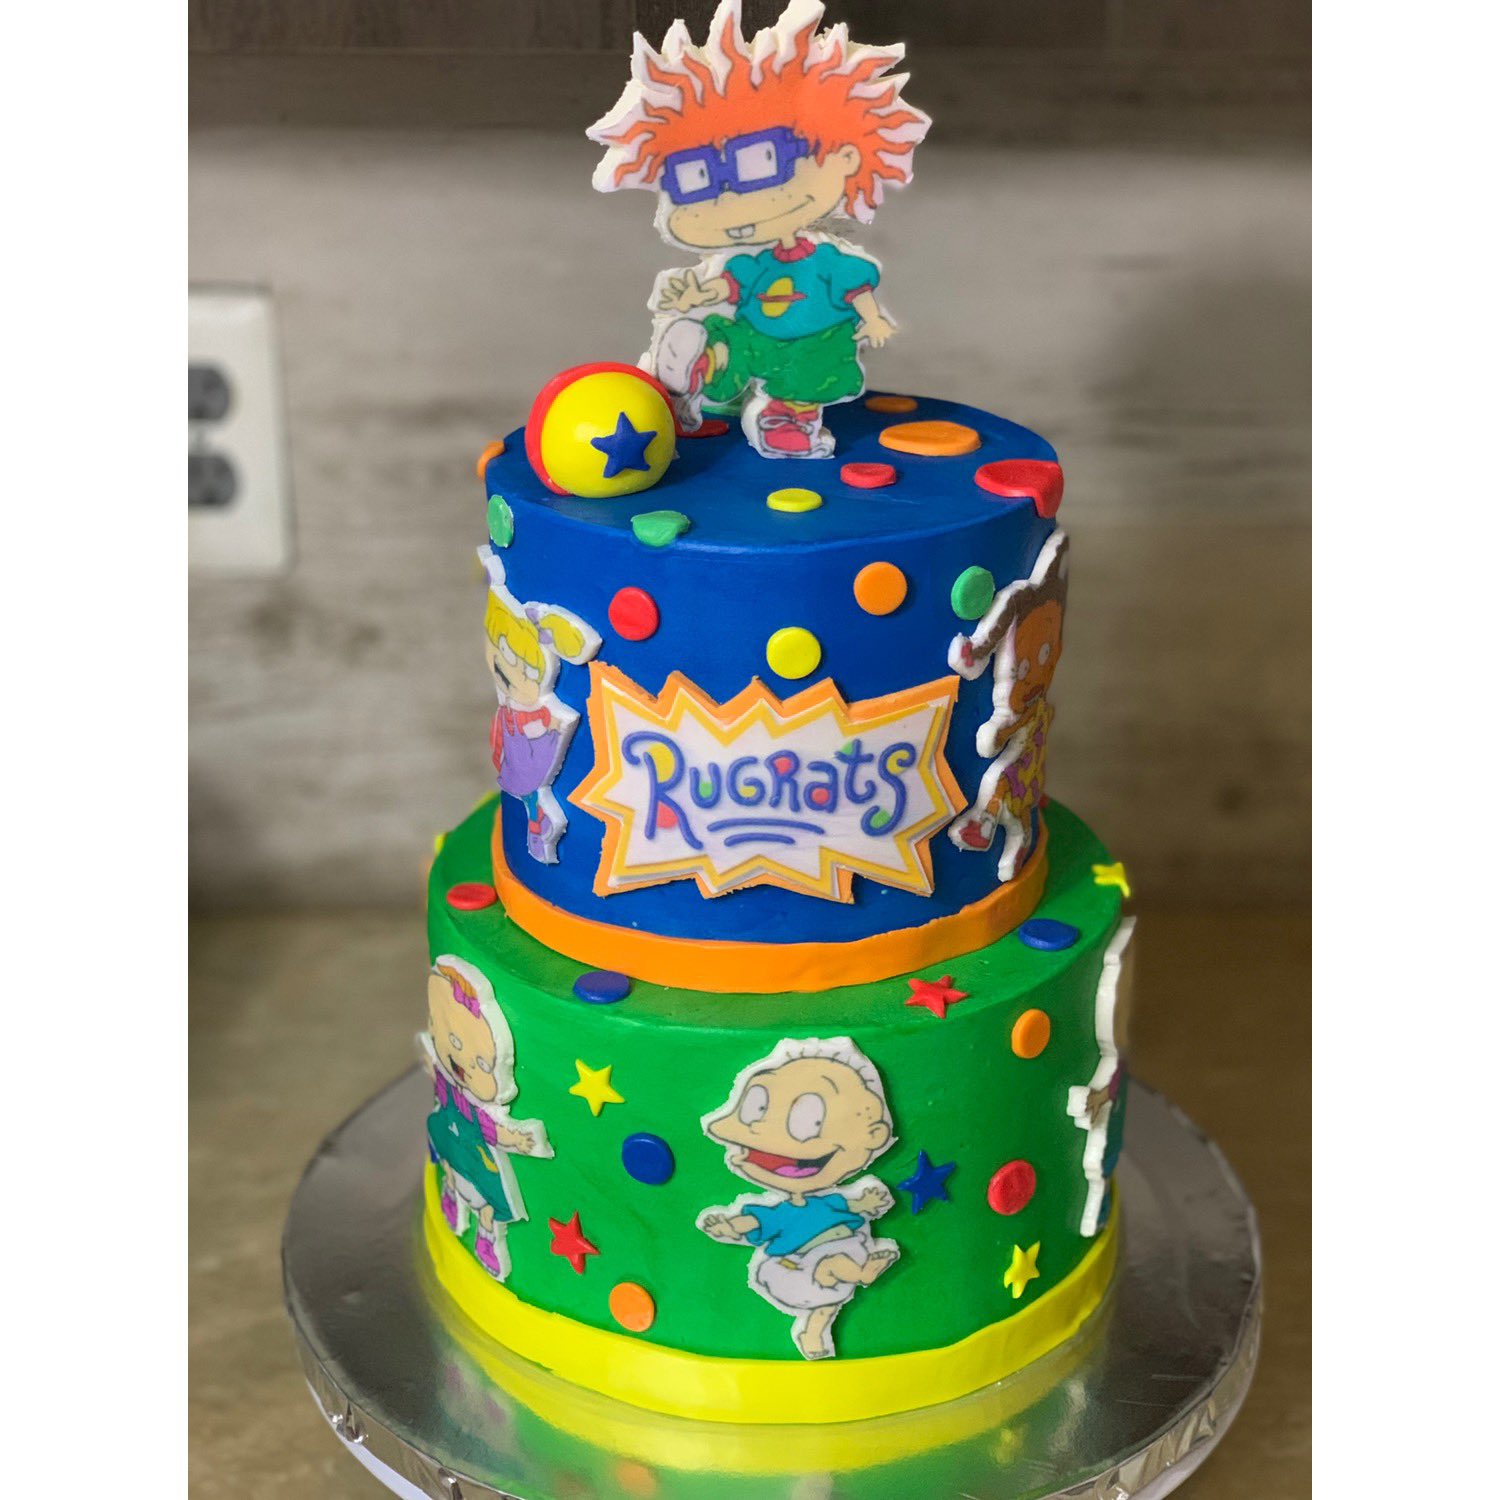 TheCupcakePoet on Twitter: "Rugrats Cake @Nickelodeon #Nickelodeon #rugrats https://t.co/rHfDoRTgF1" / Twitter